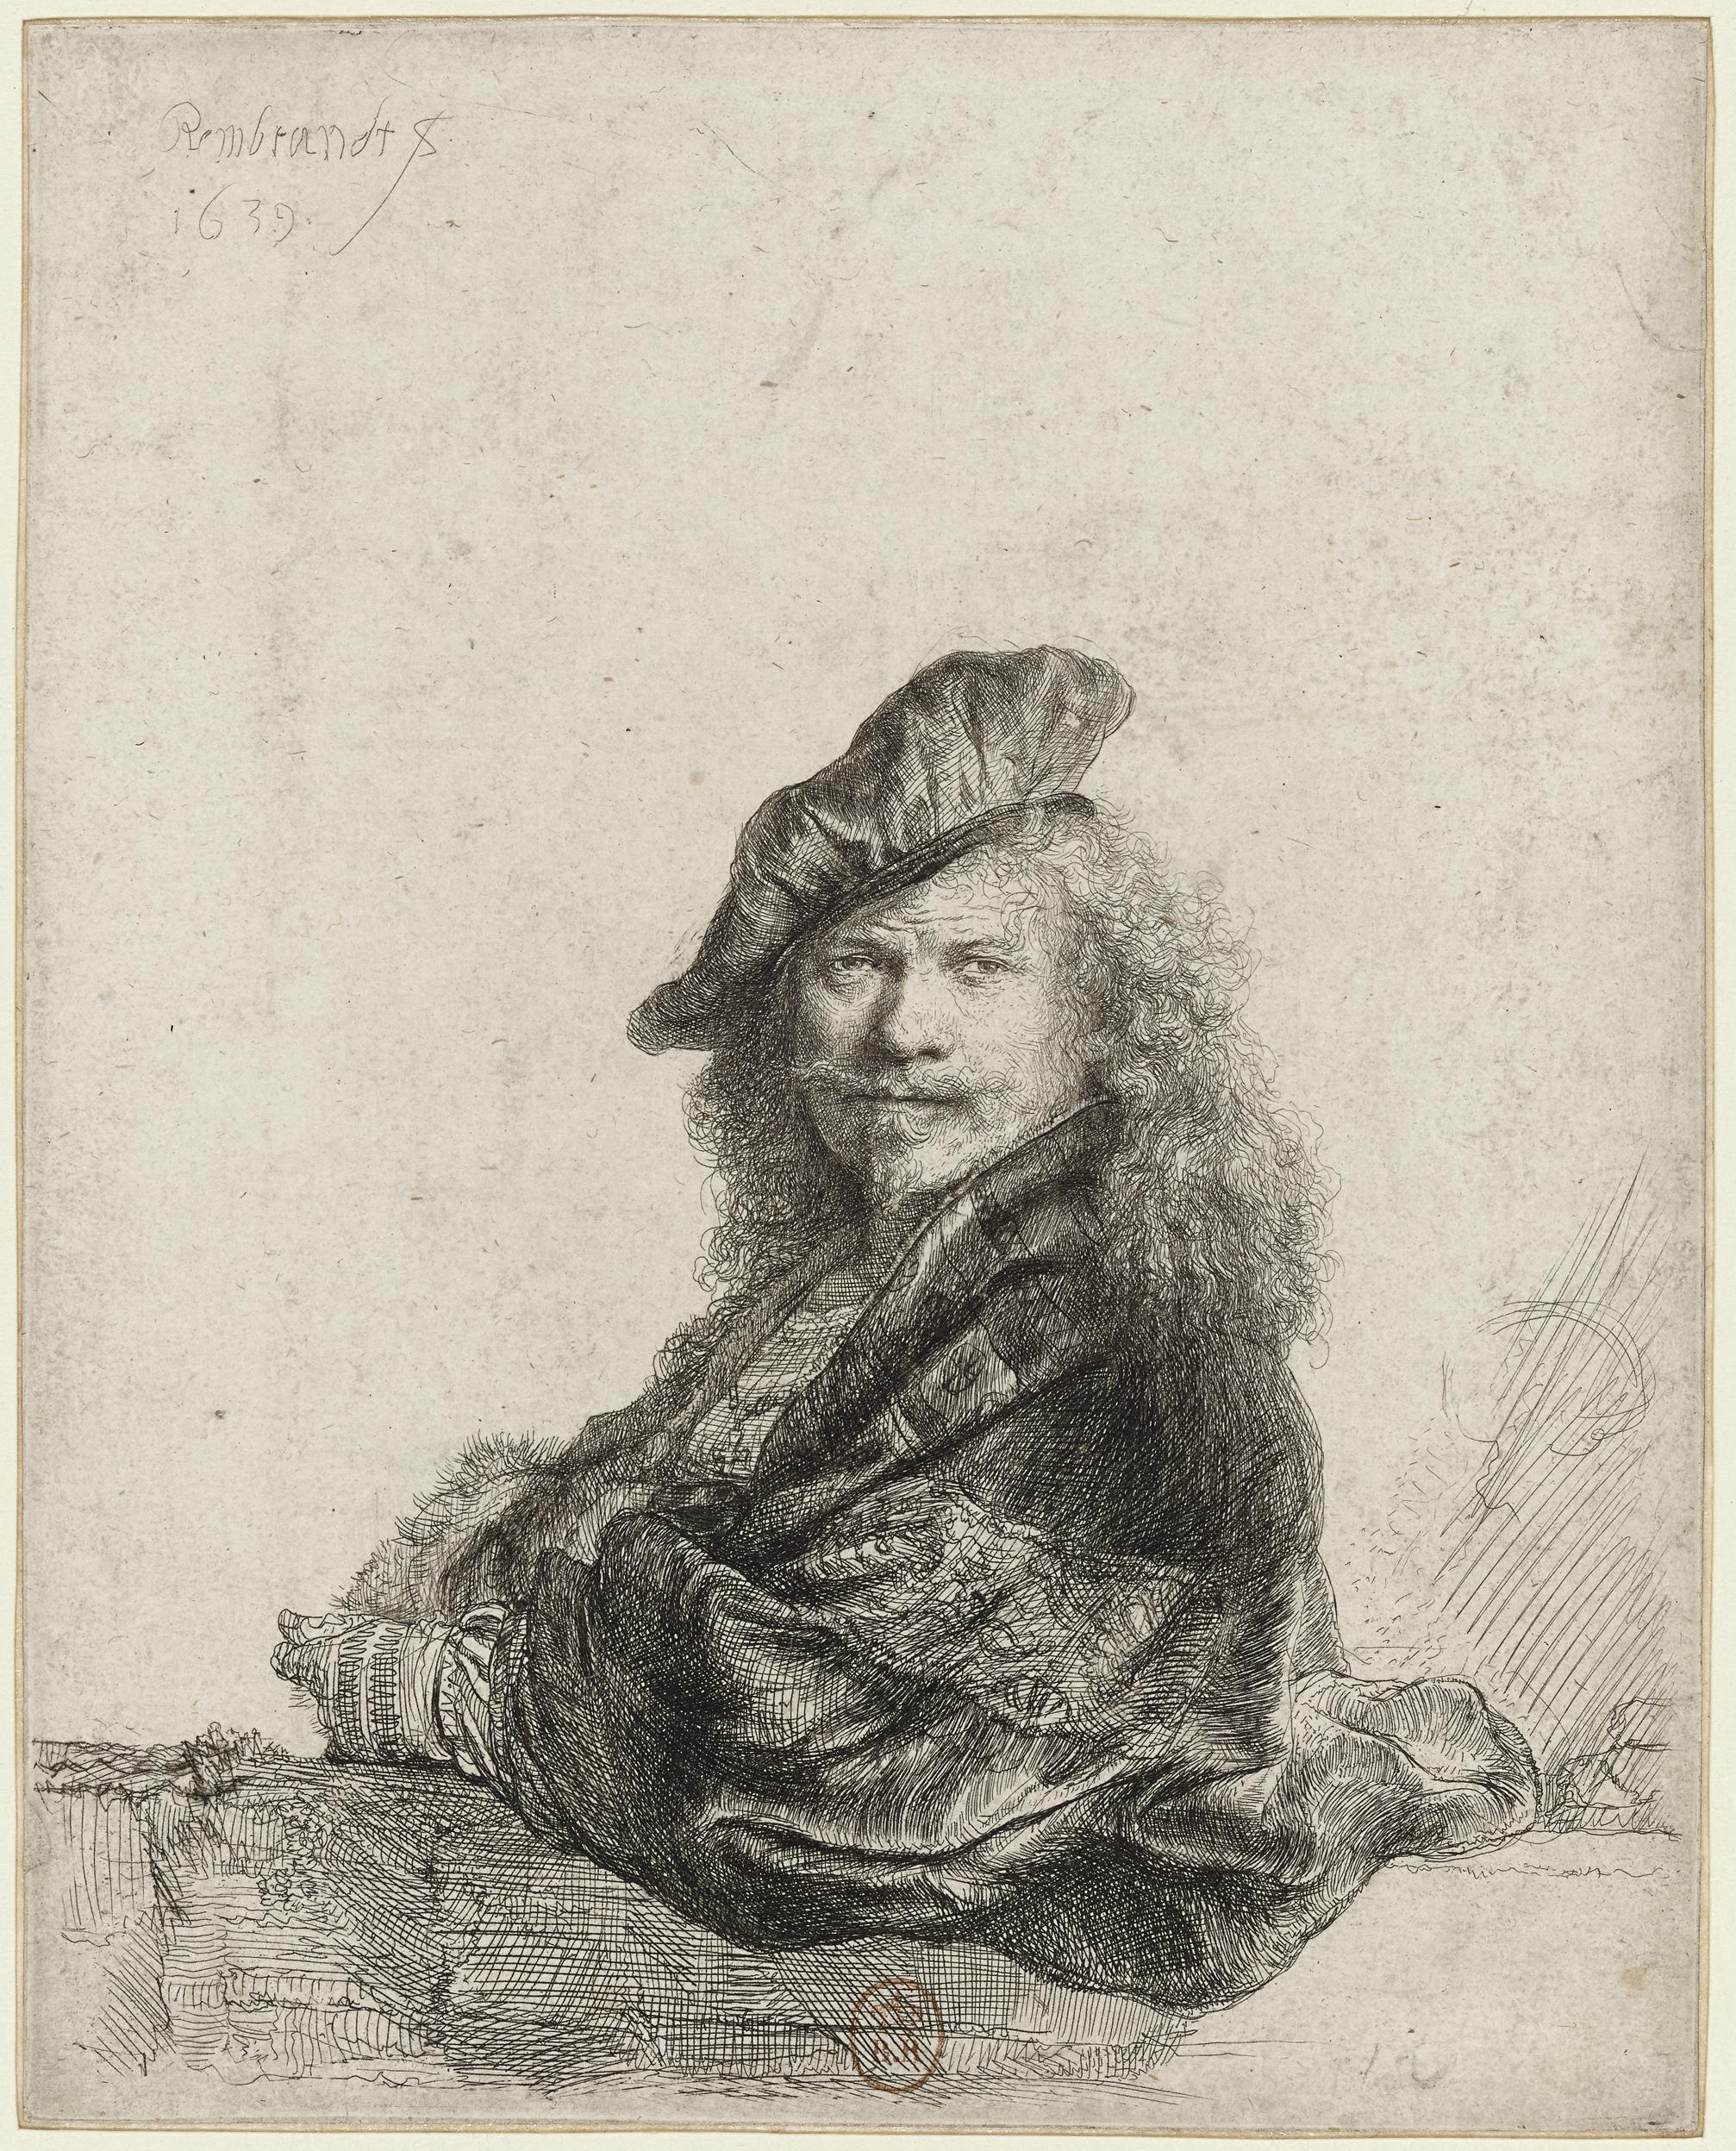 Rembrandt van Rijn, Self-Portrait Leaning on a Stone Sill, 1639